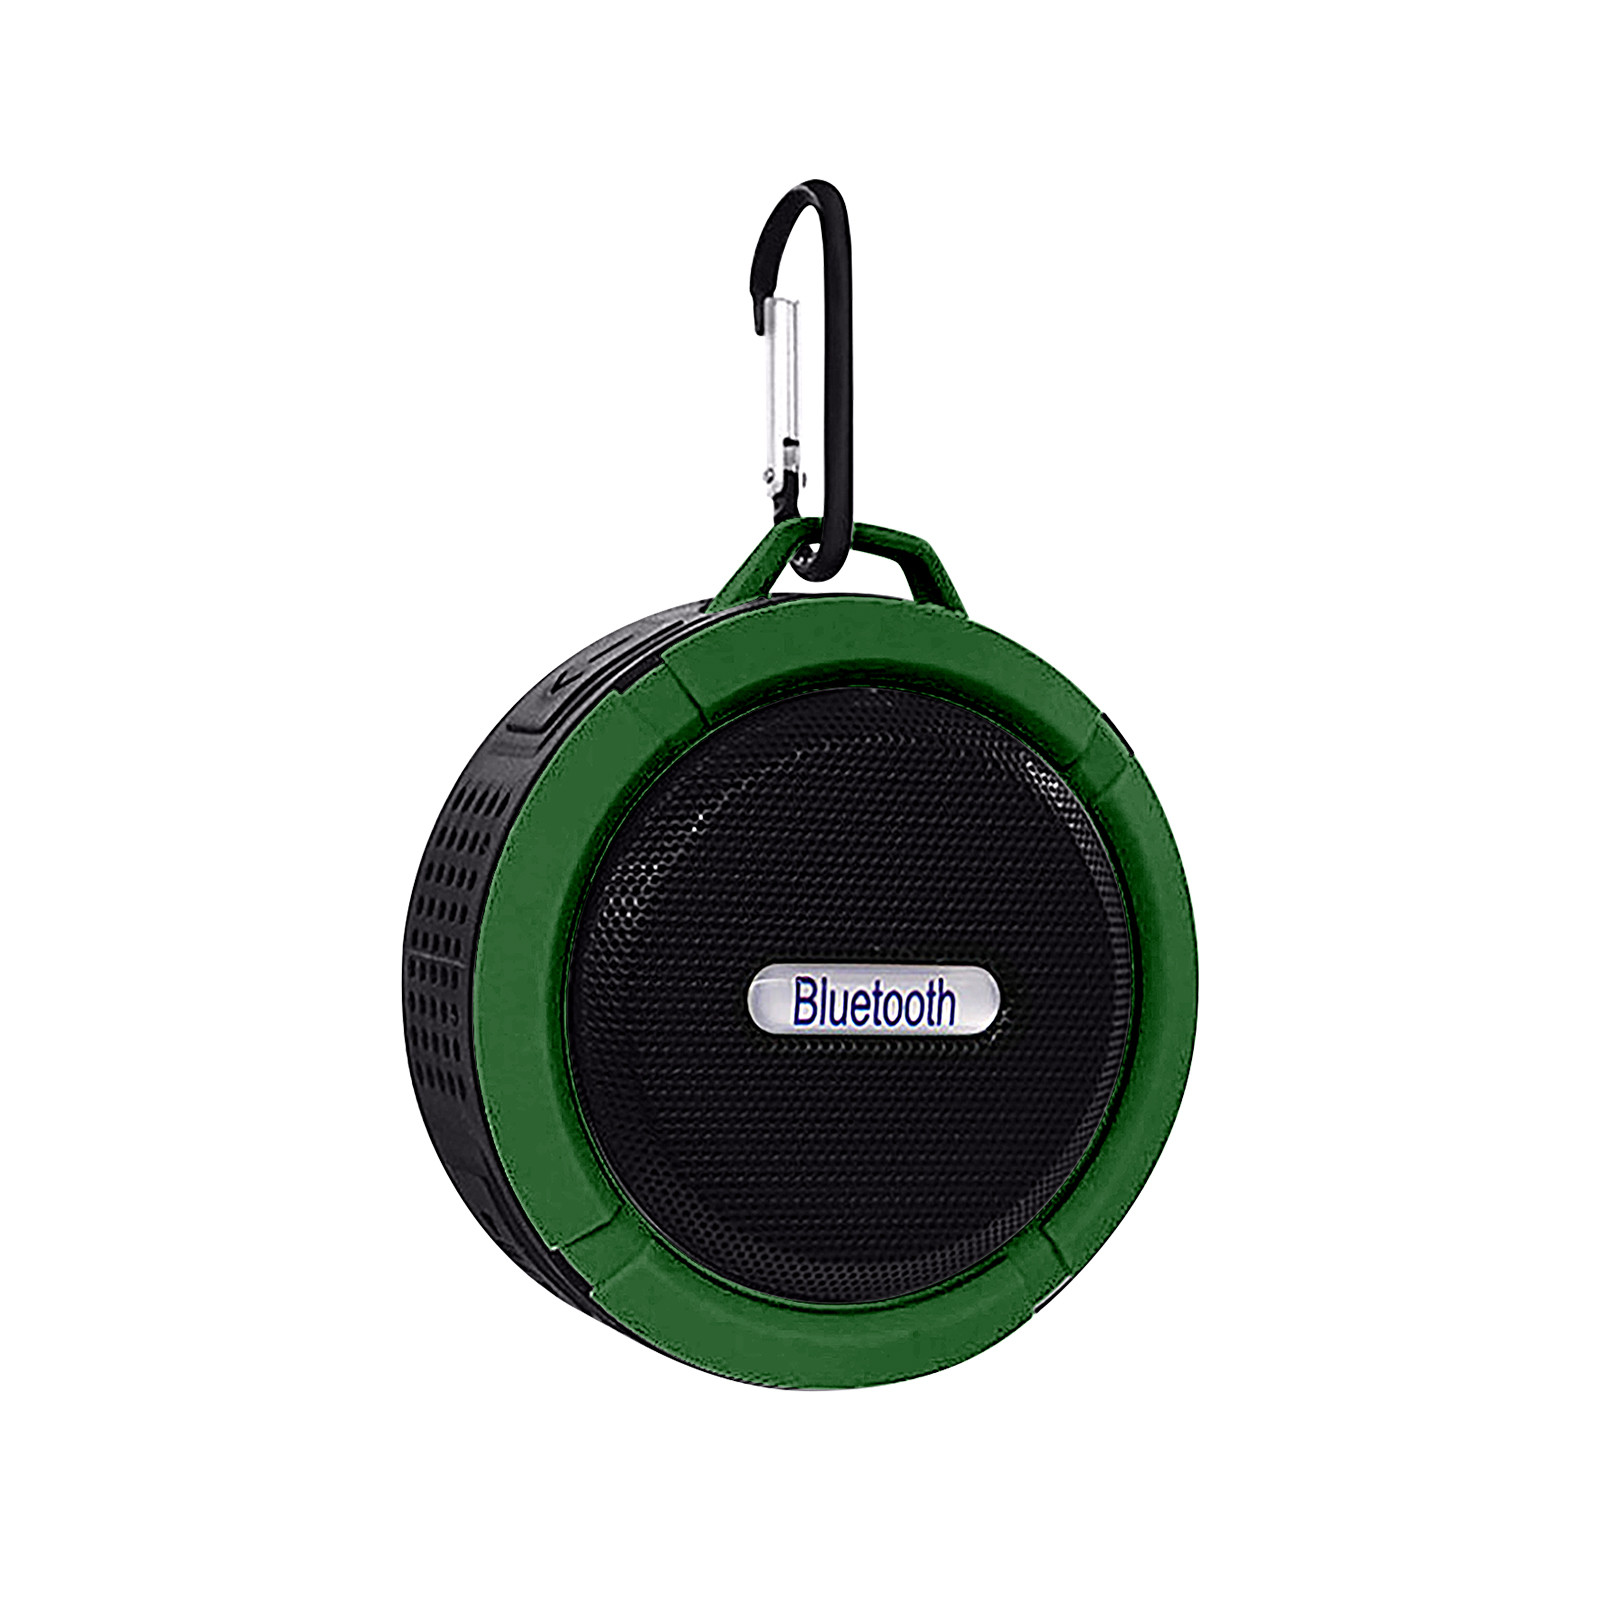 Deals of the Day,Tarmeek Bluetooth Speakers Outdoor Portable Buckle Gift Handsfree Car TF Card Wireless Audio C6 Waterproof Sucker Bluetooth Audio 5W High-power Horn Speakers Bluetooth Wireless - image 1 of 8